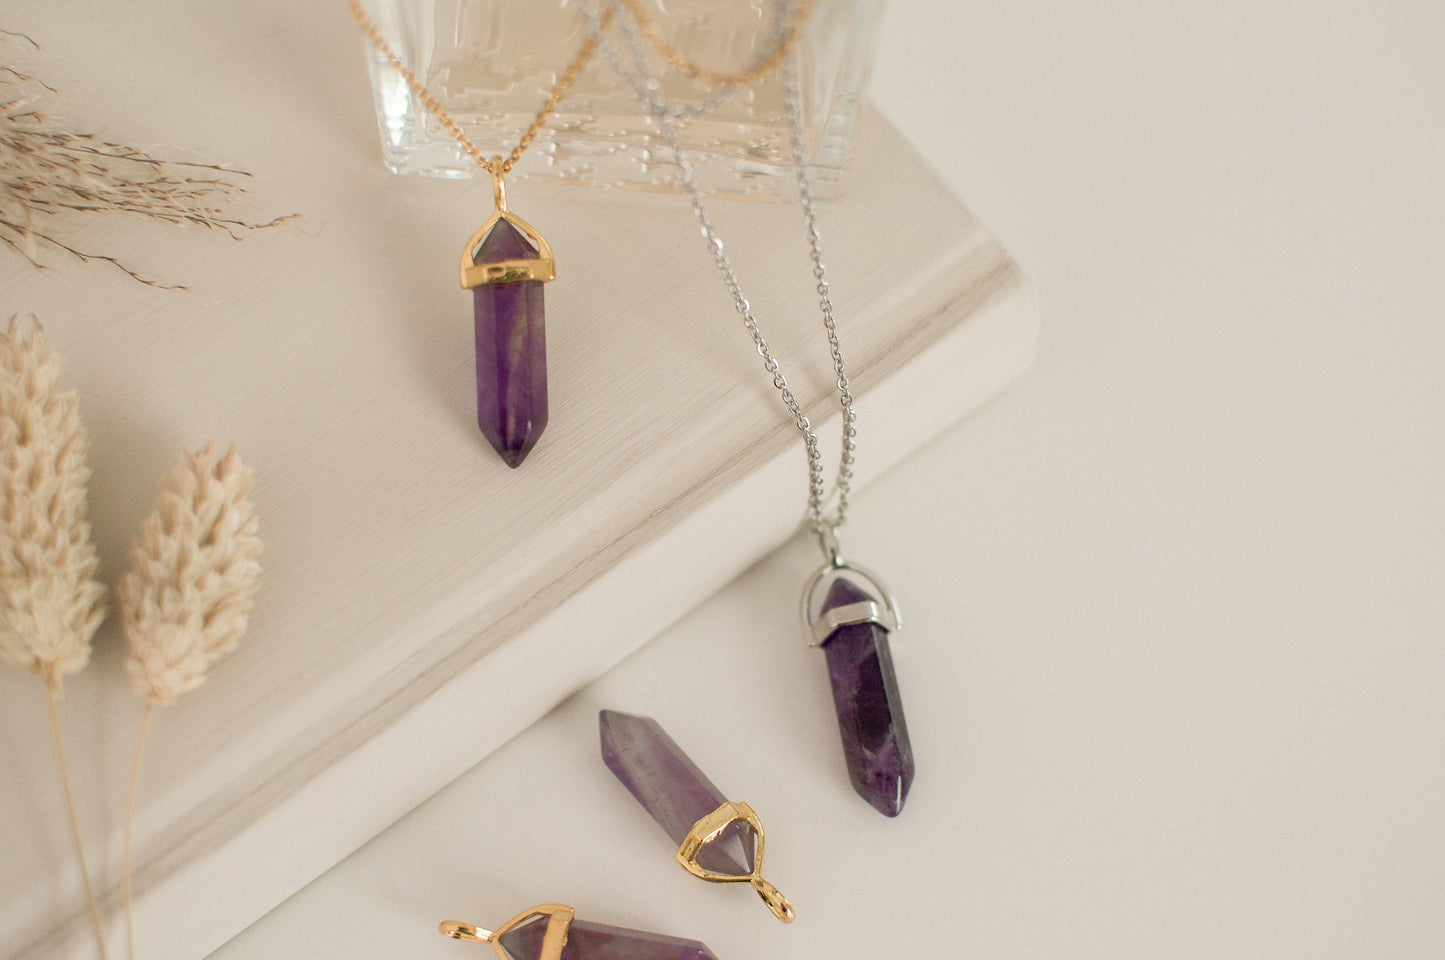 Amethyst Silver Purple Healing Stone Crystal Necklace, Amethyst Pendant Birthstone Necklace